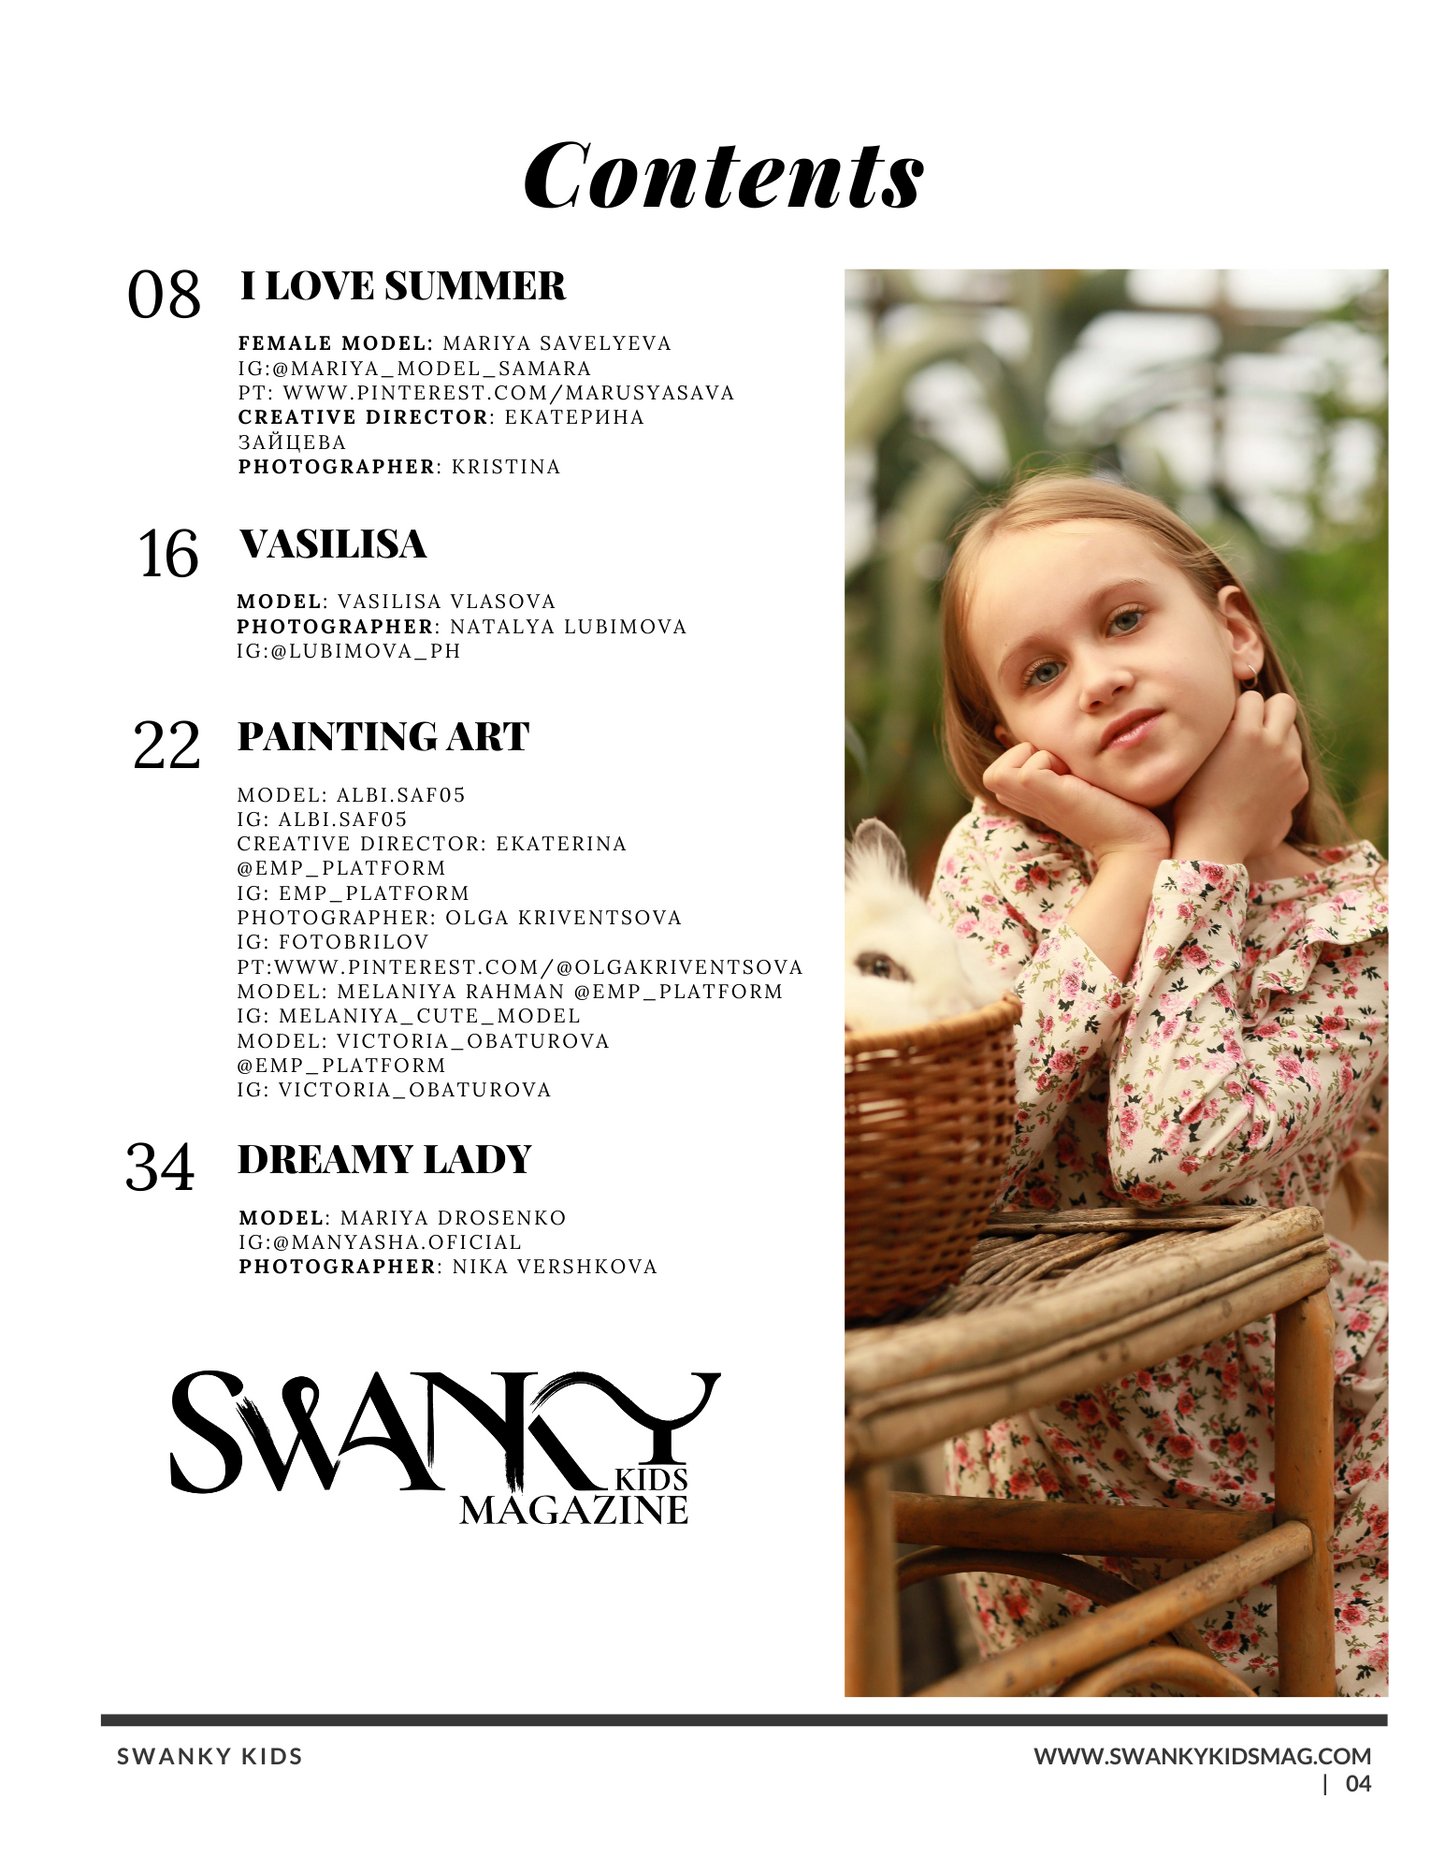 Swanky Kids Magazine MAY 2022 VOL XVIII Issue 6